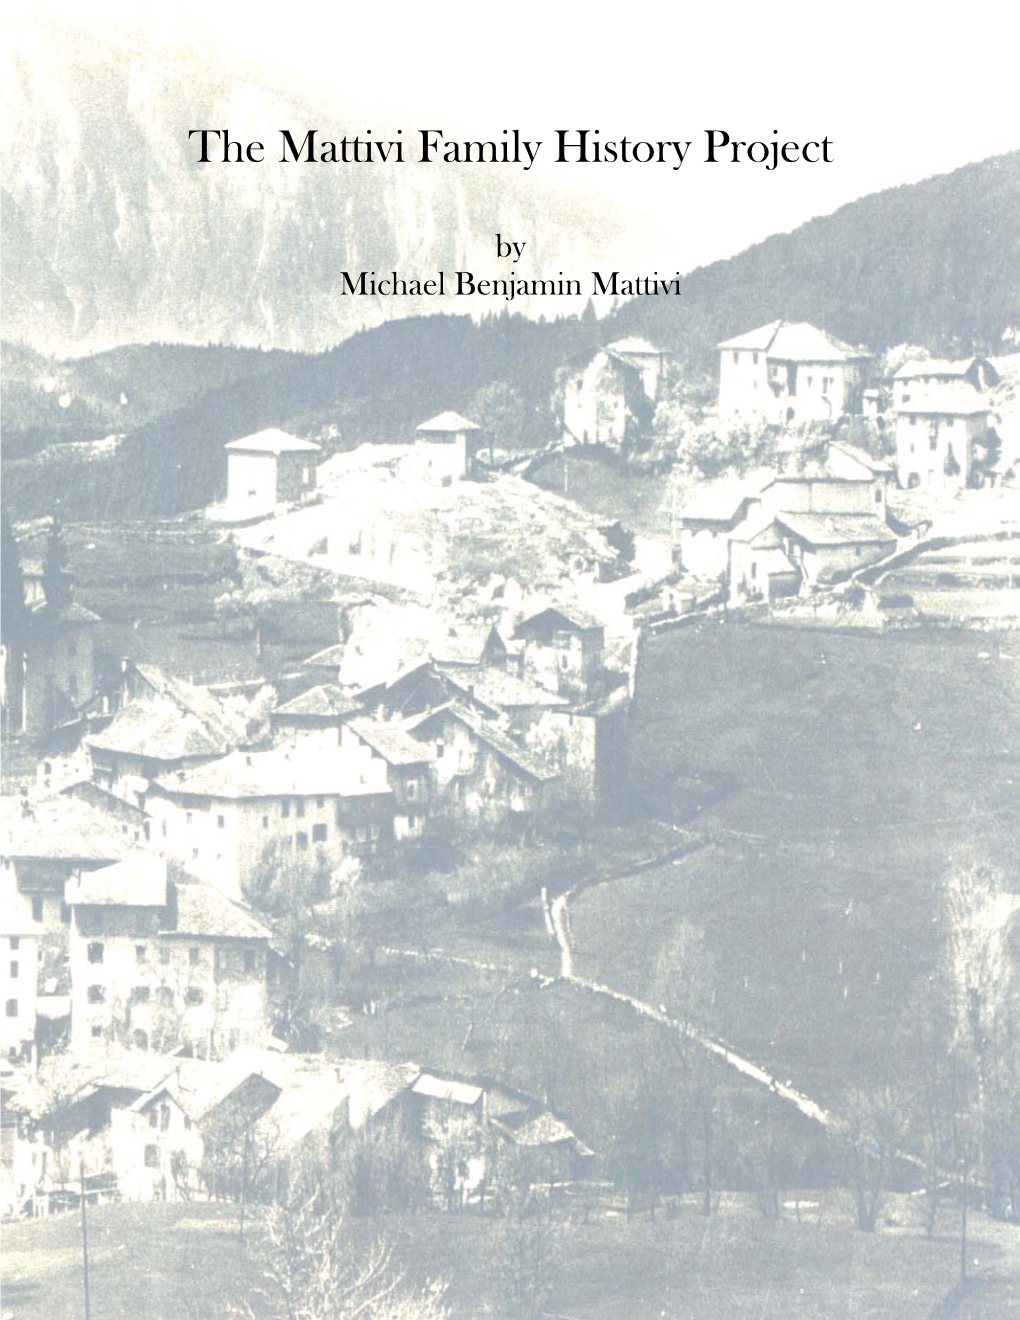 The Mattivi Family History Project